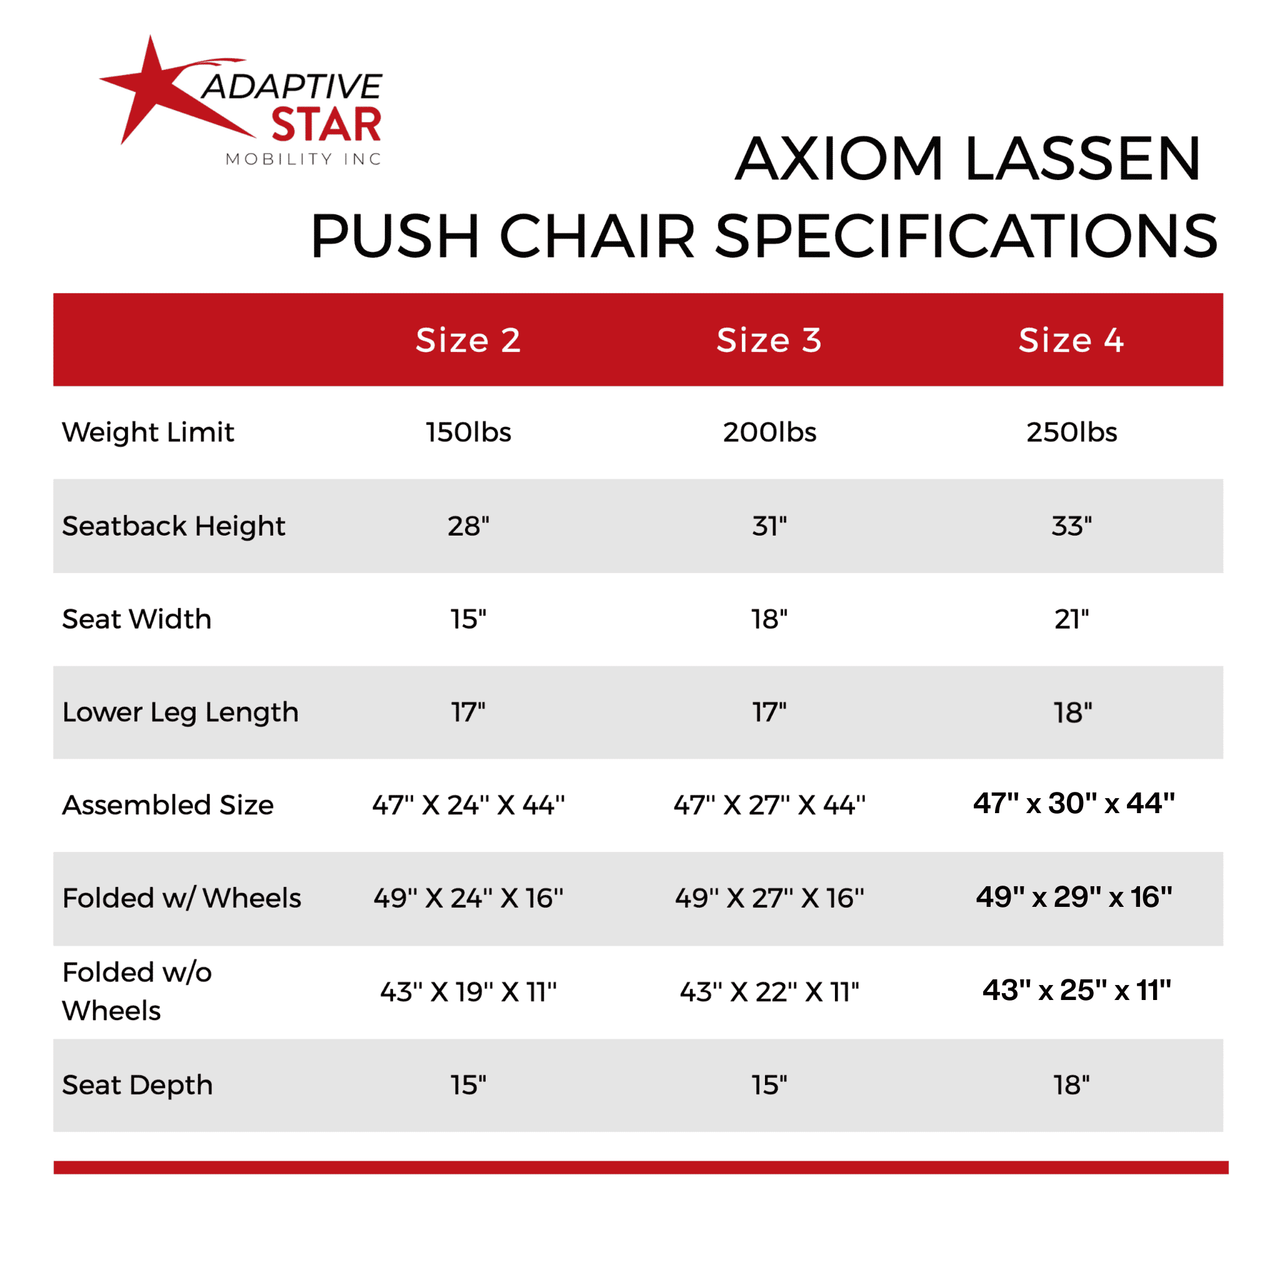 Adaptive Star ALA3N Axiom LASSEN 3 Indoor/Outdoor Mobility Push Chair, Navy